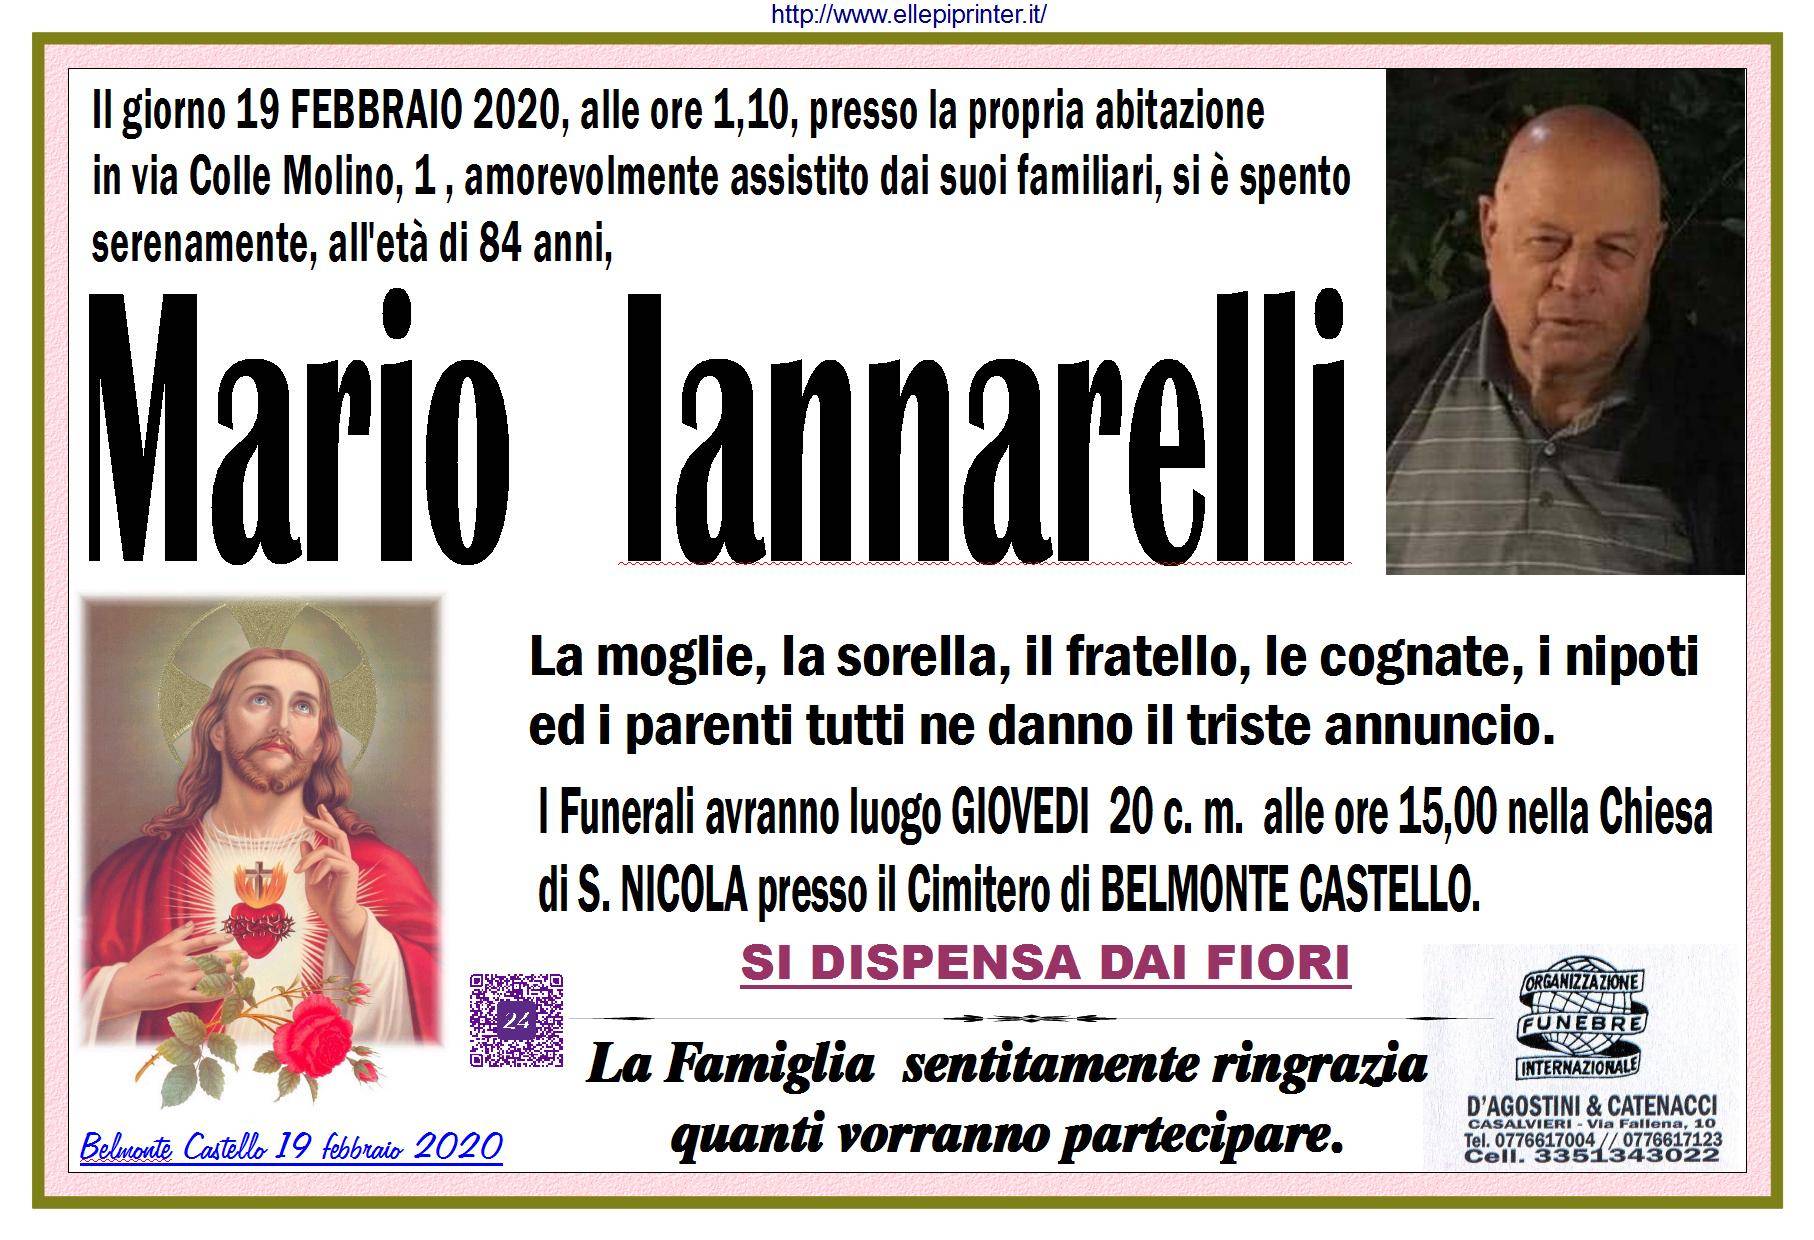 Mario Iannarelli